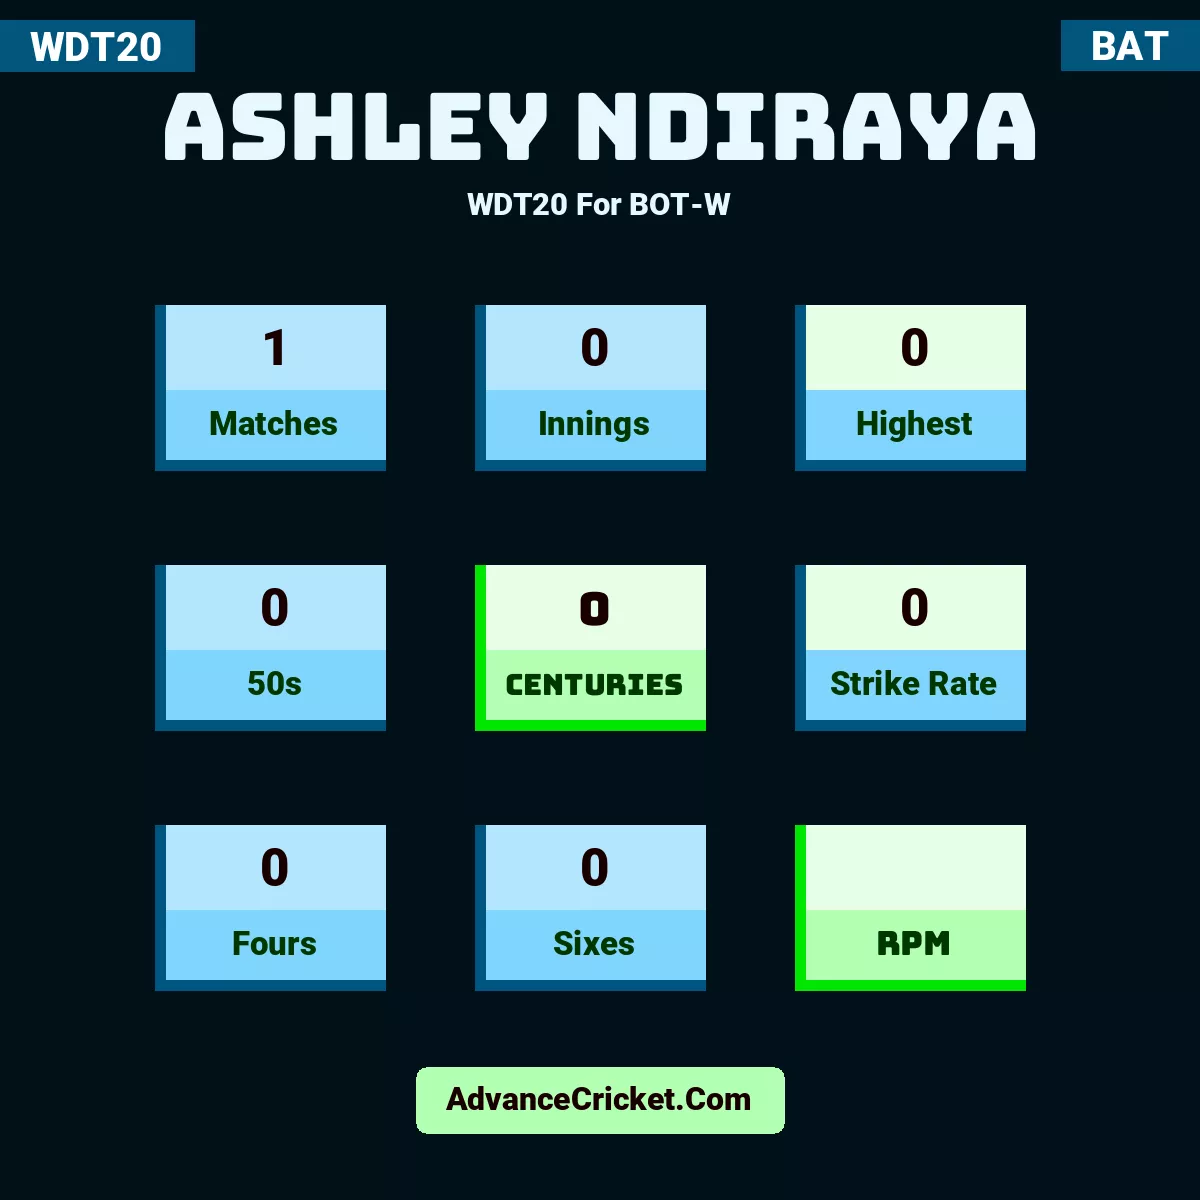 Ashley Ndiraya WDT20  For BOT-W, Ashley Ndiraya played 1 matches, scored 0 runs as highest, 0 half-centuries, and 0 centuries, with a strike rate of 0. A.Ndiraya hit 0 fours and 0 sixes.